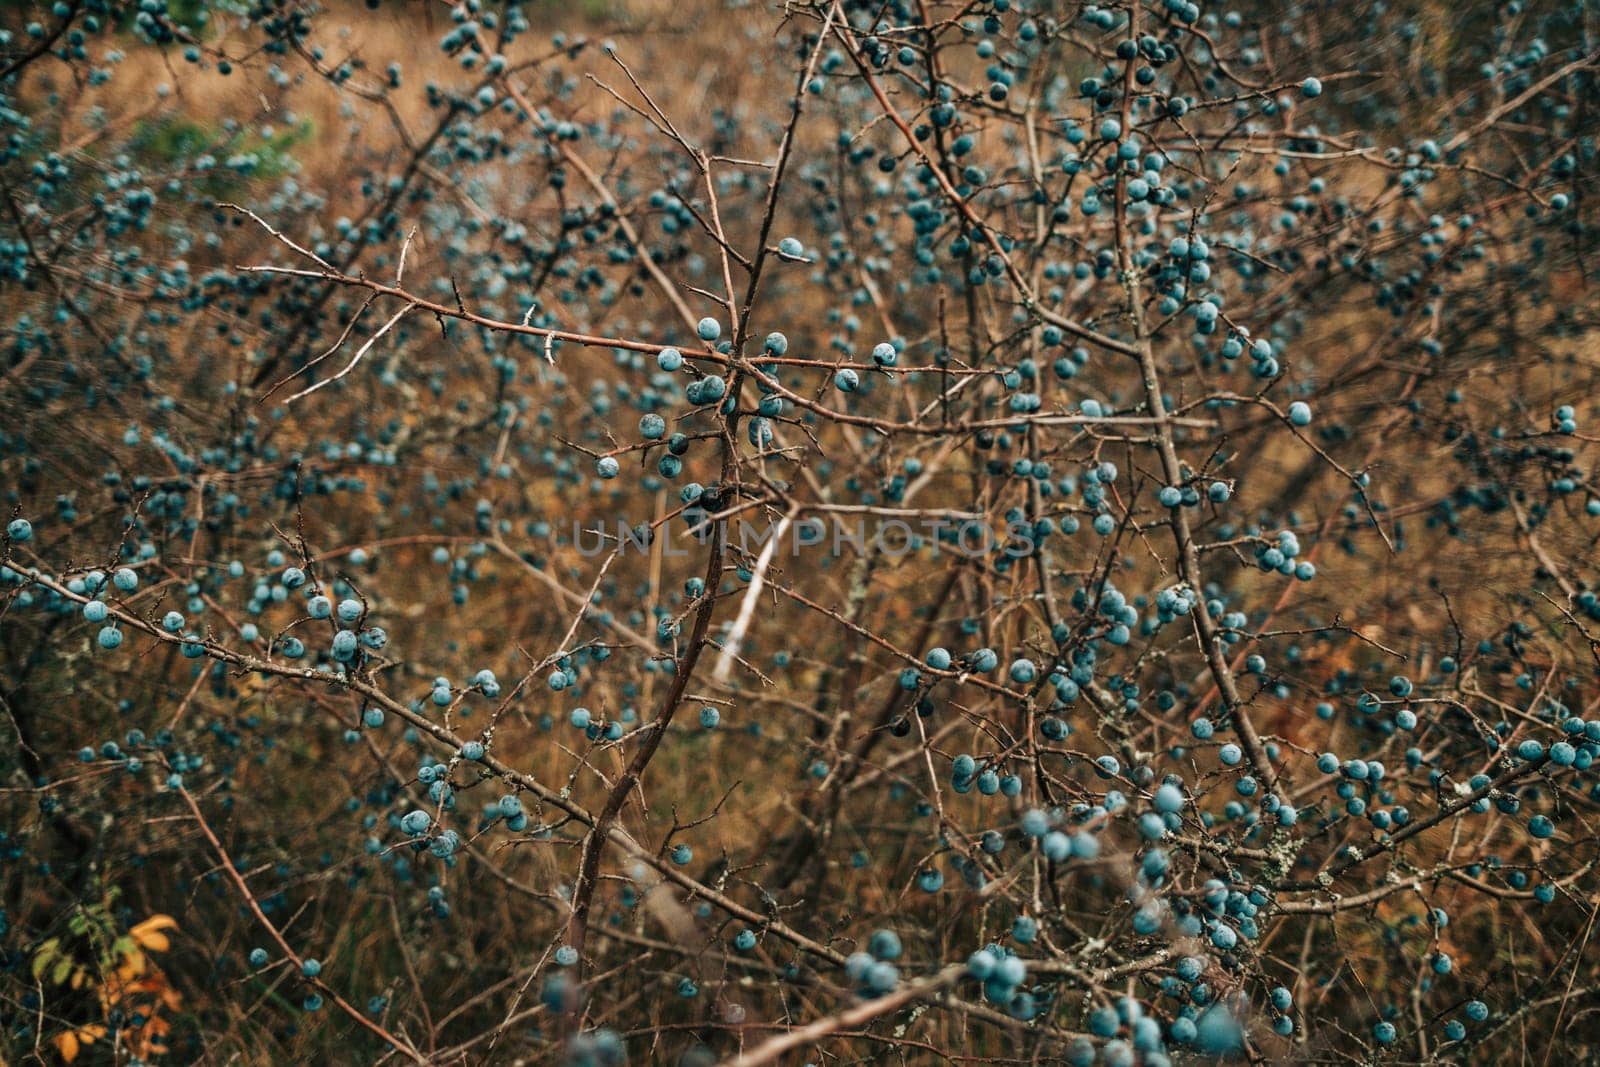 Wild acid ripe sloe - Prunus spinosa in autumn nature. Botany, plants concept. High quality photo